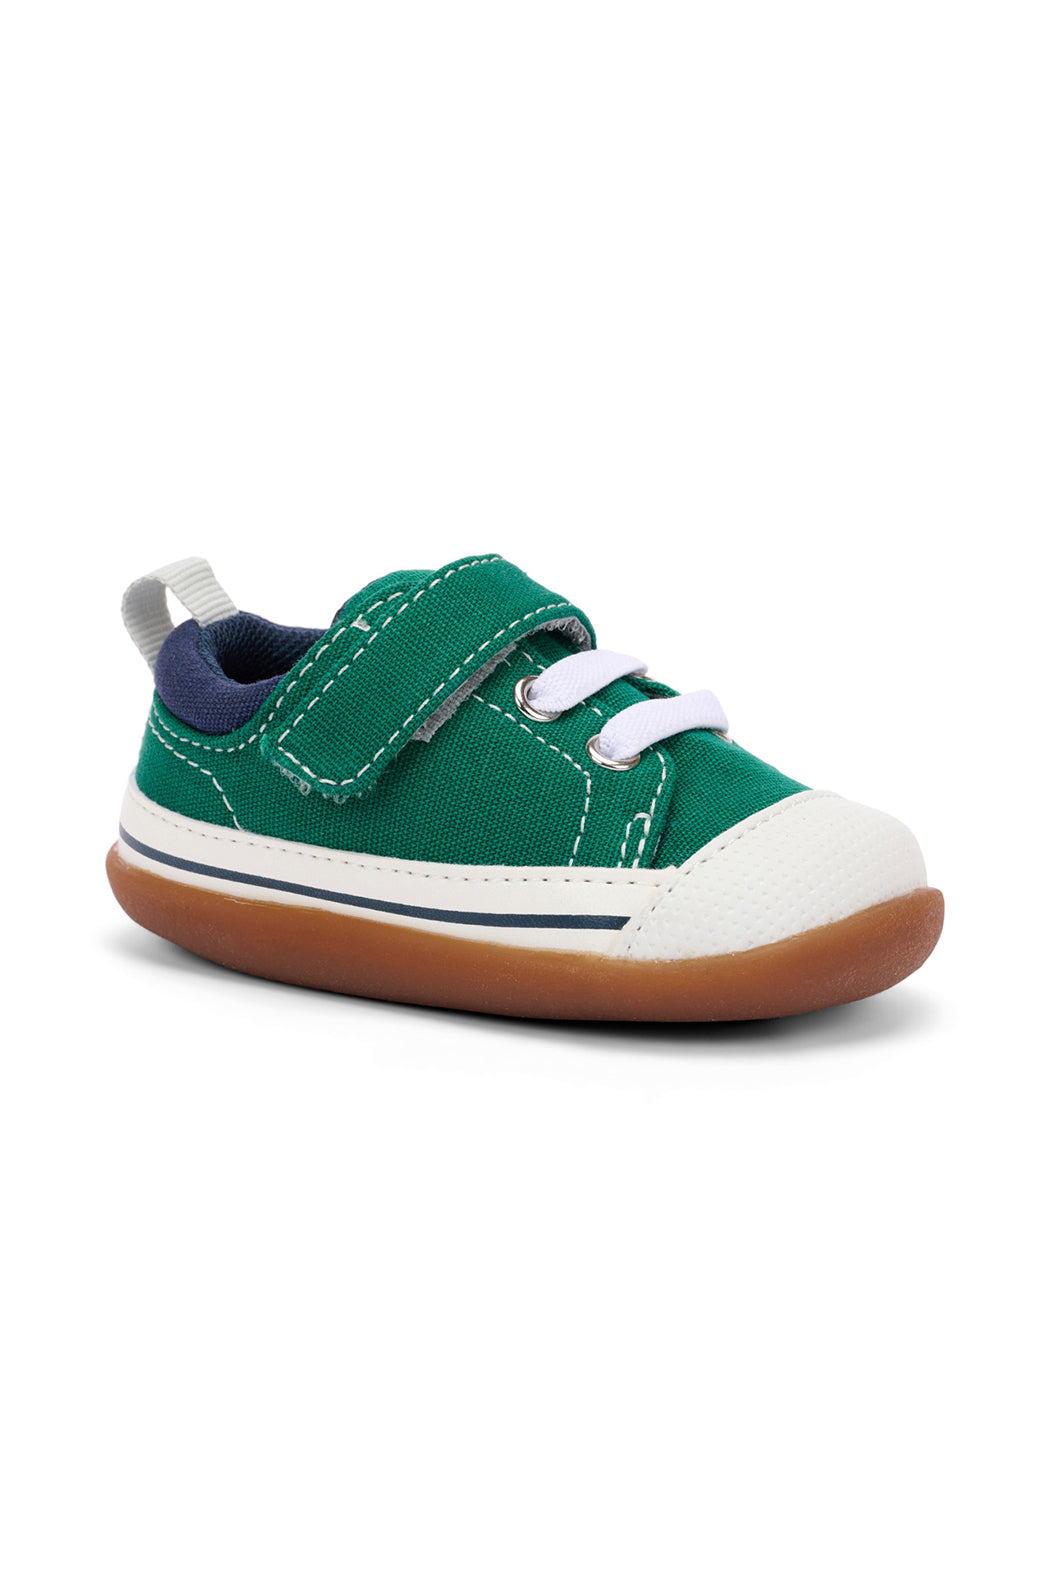 See Kai Run Stevie II Infant Sneaker - Green